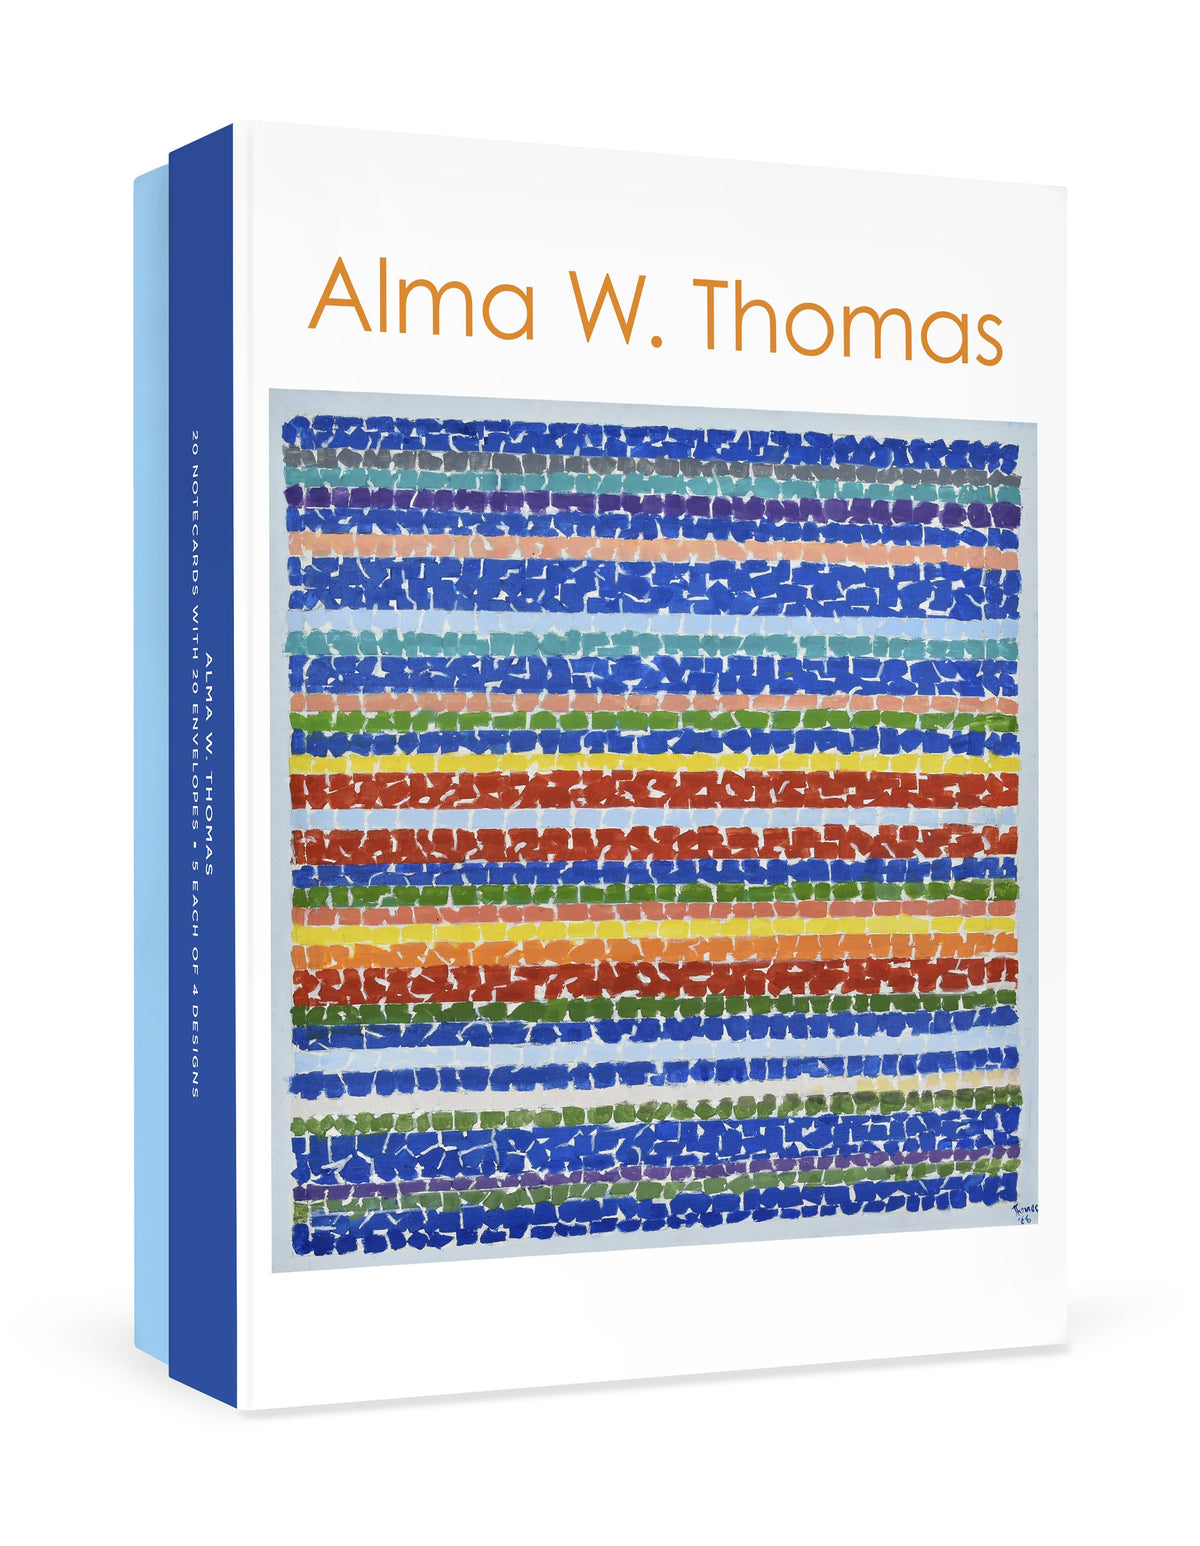 Alma Thomas Notecard Set